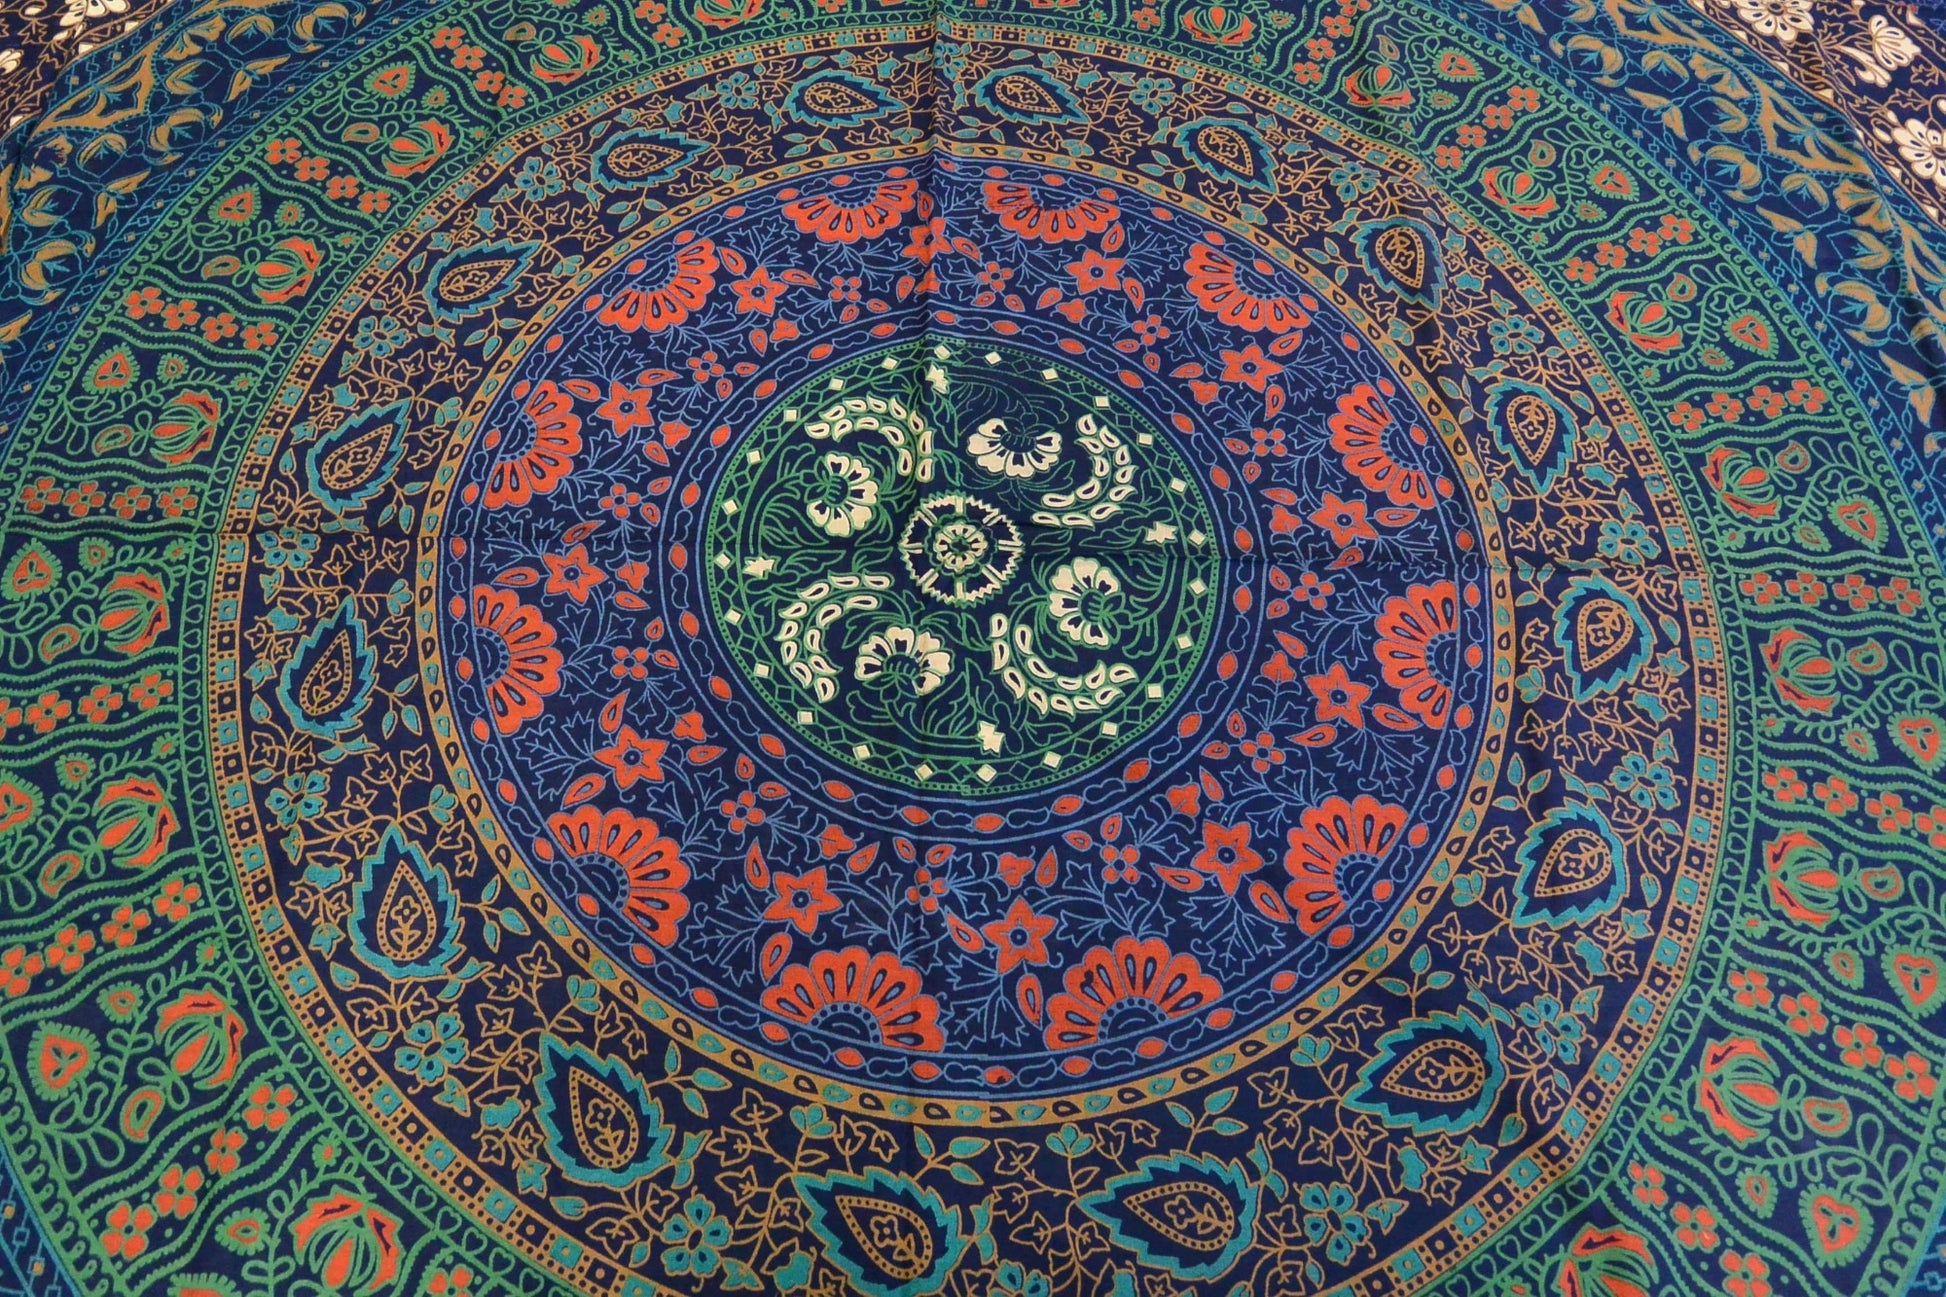 Stoff Bettlaken Tagesdecke Mandala Laken, Decke blau-grün-rot